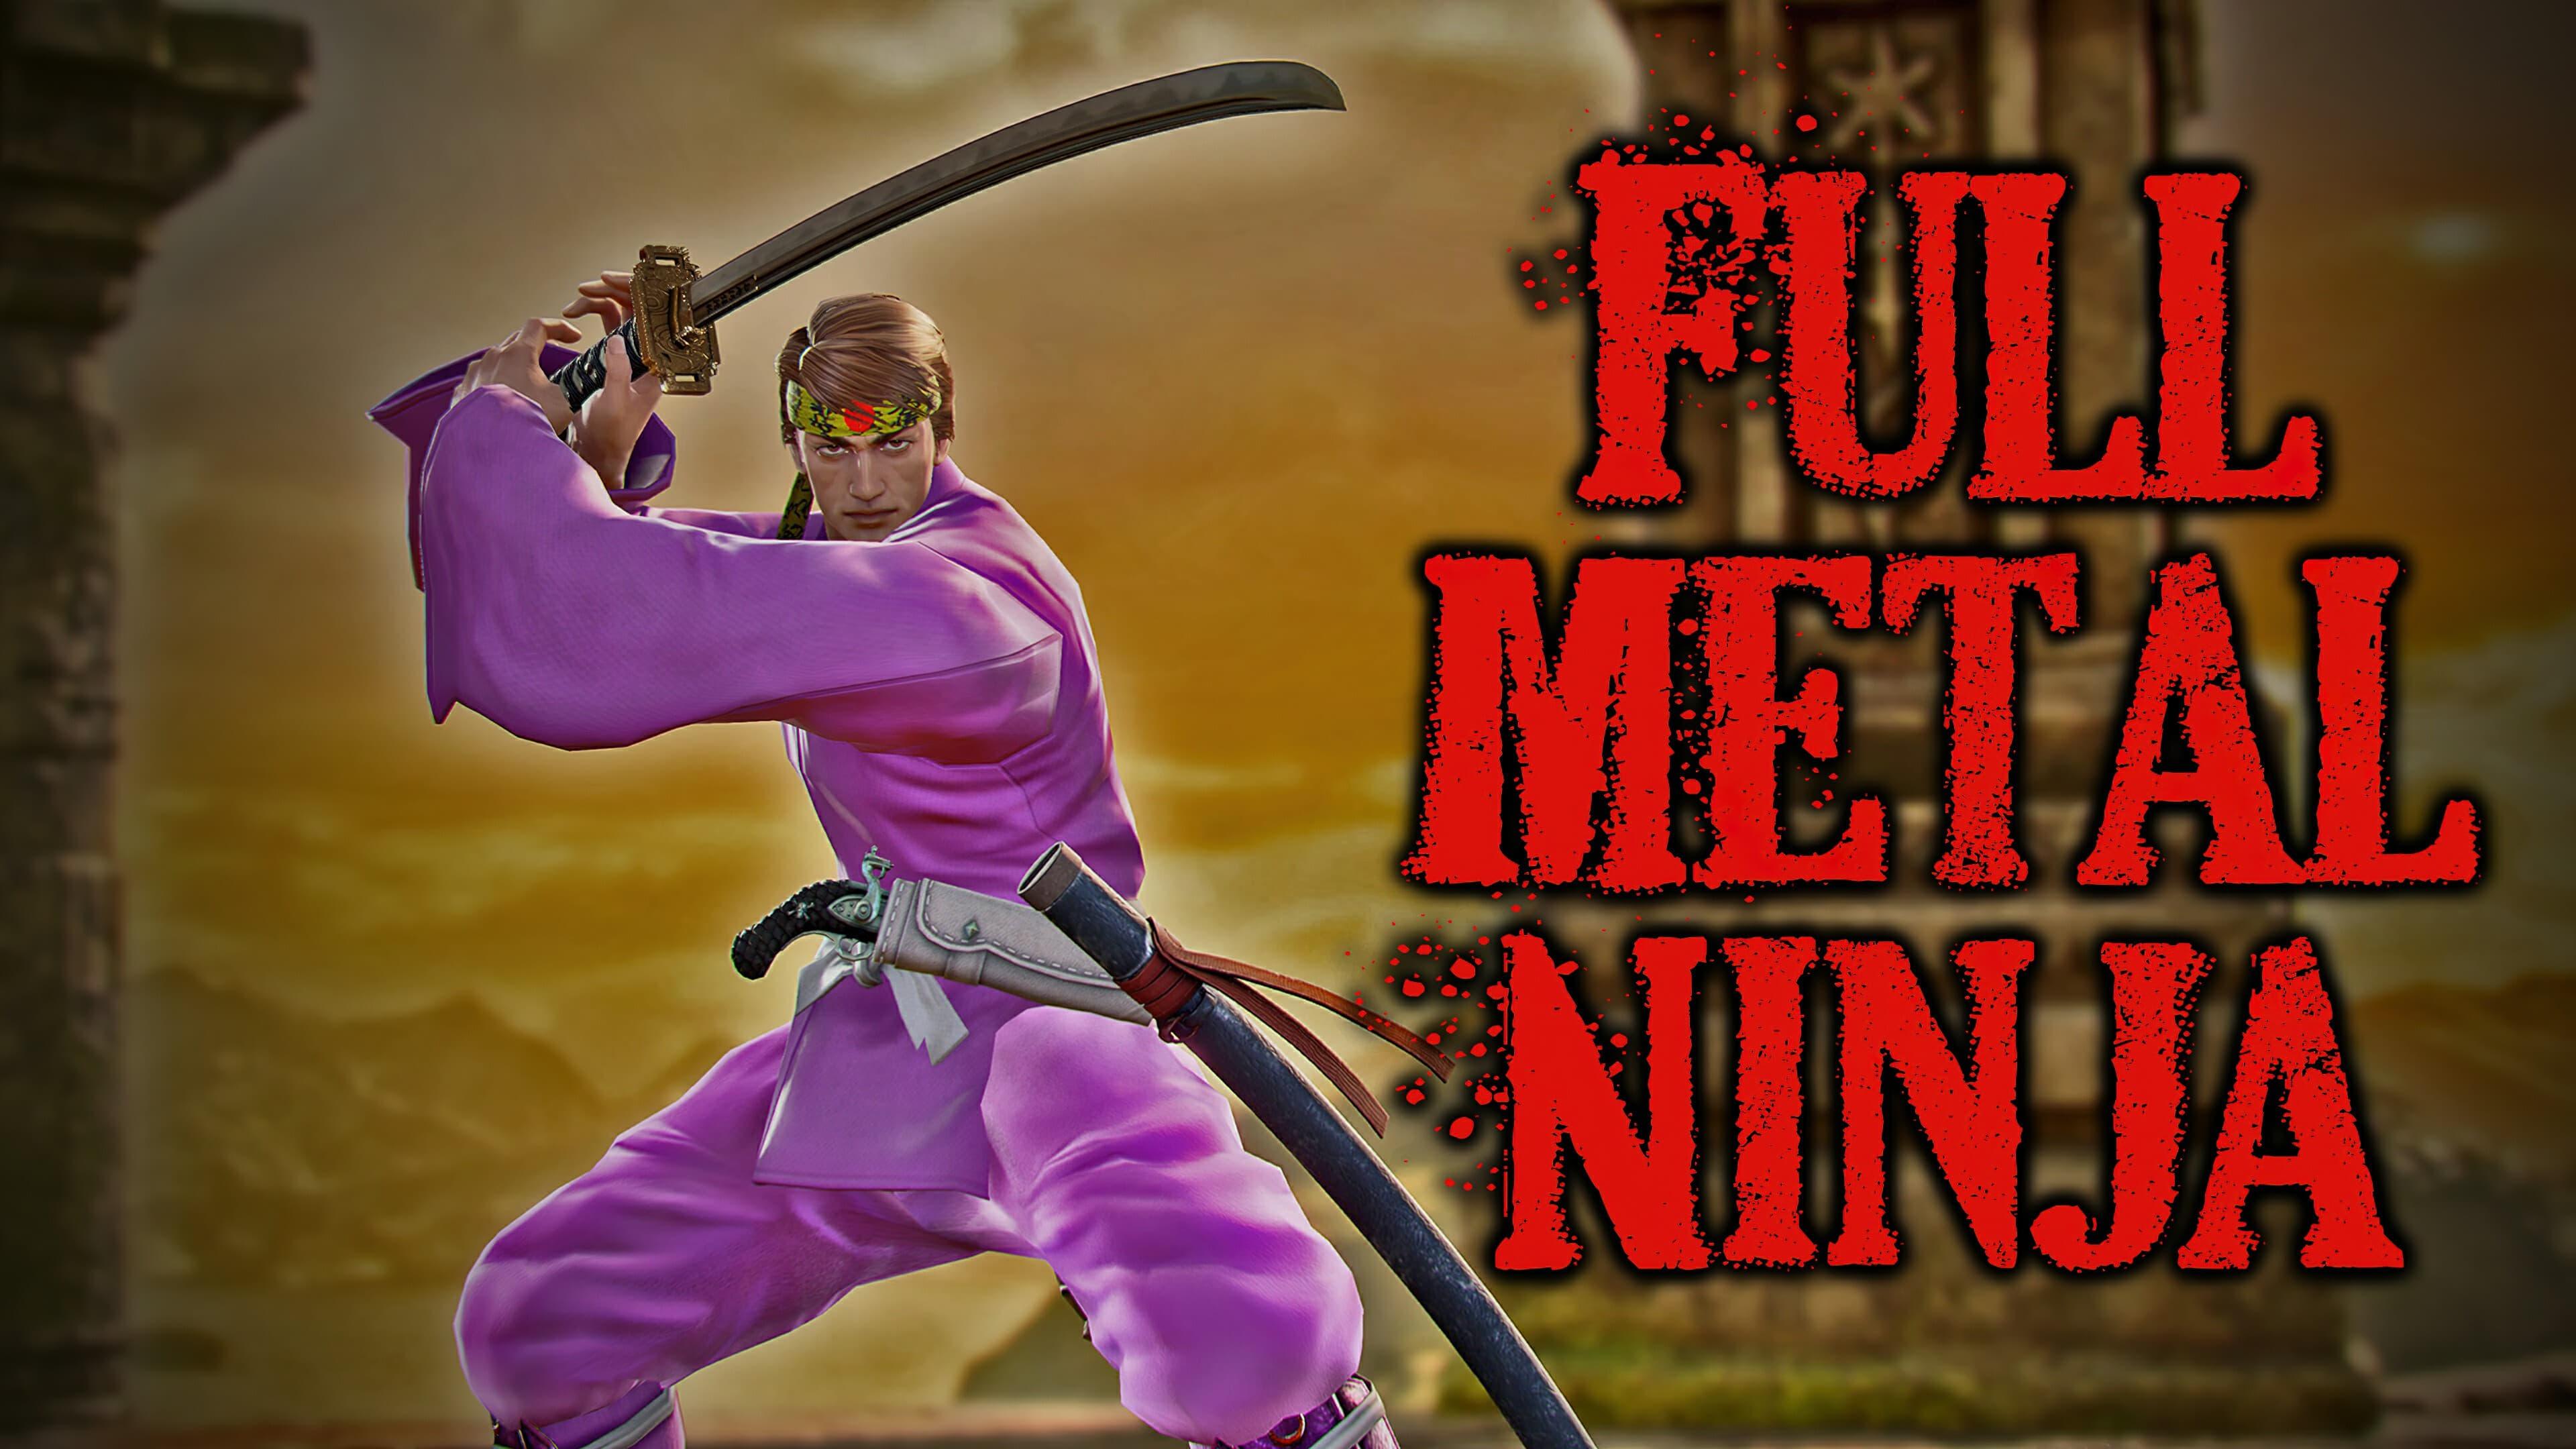 Full Metal Ninja backdrop